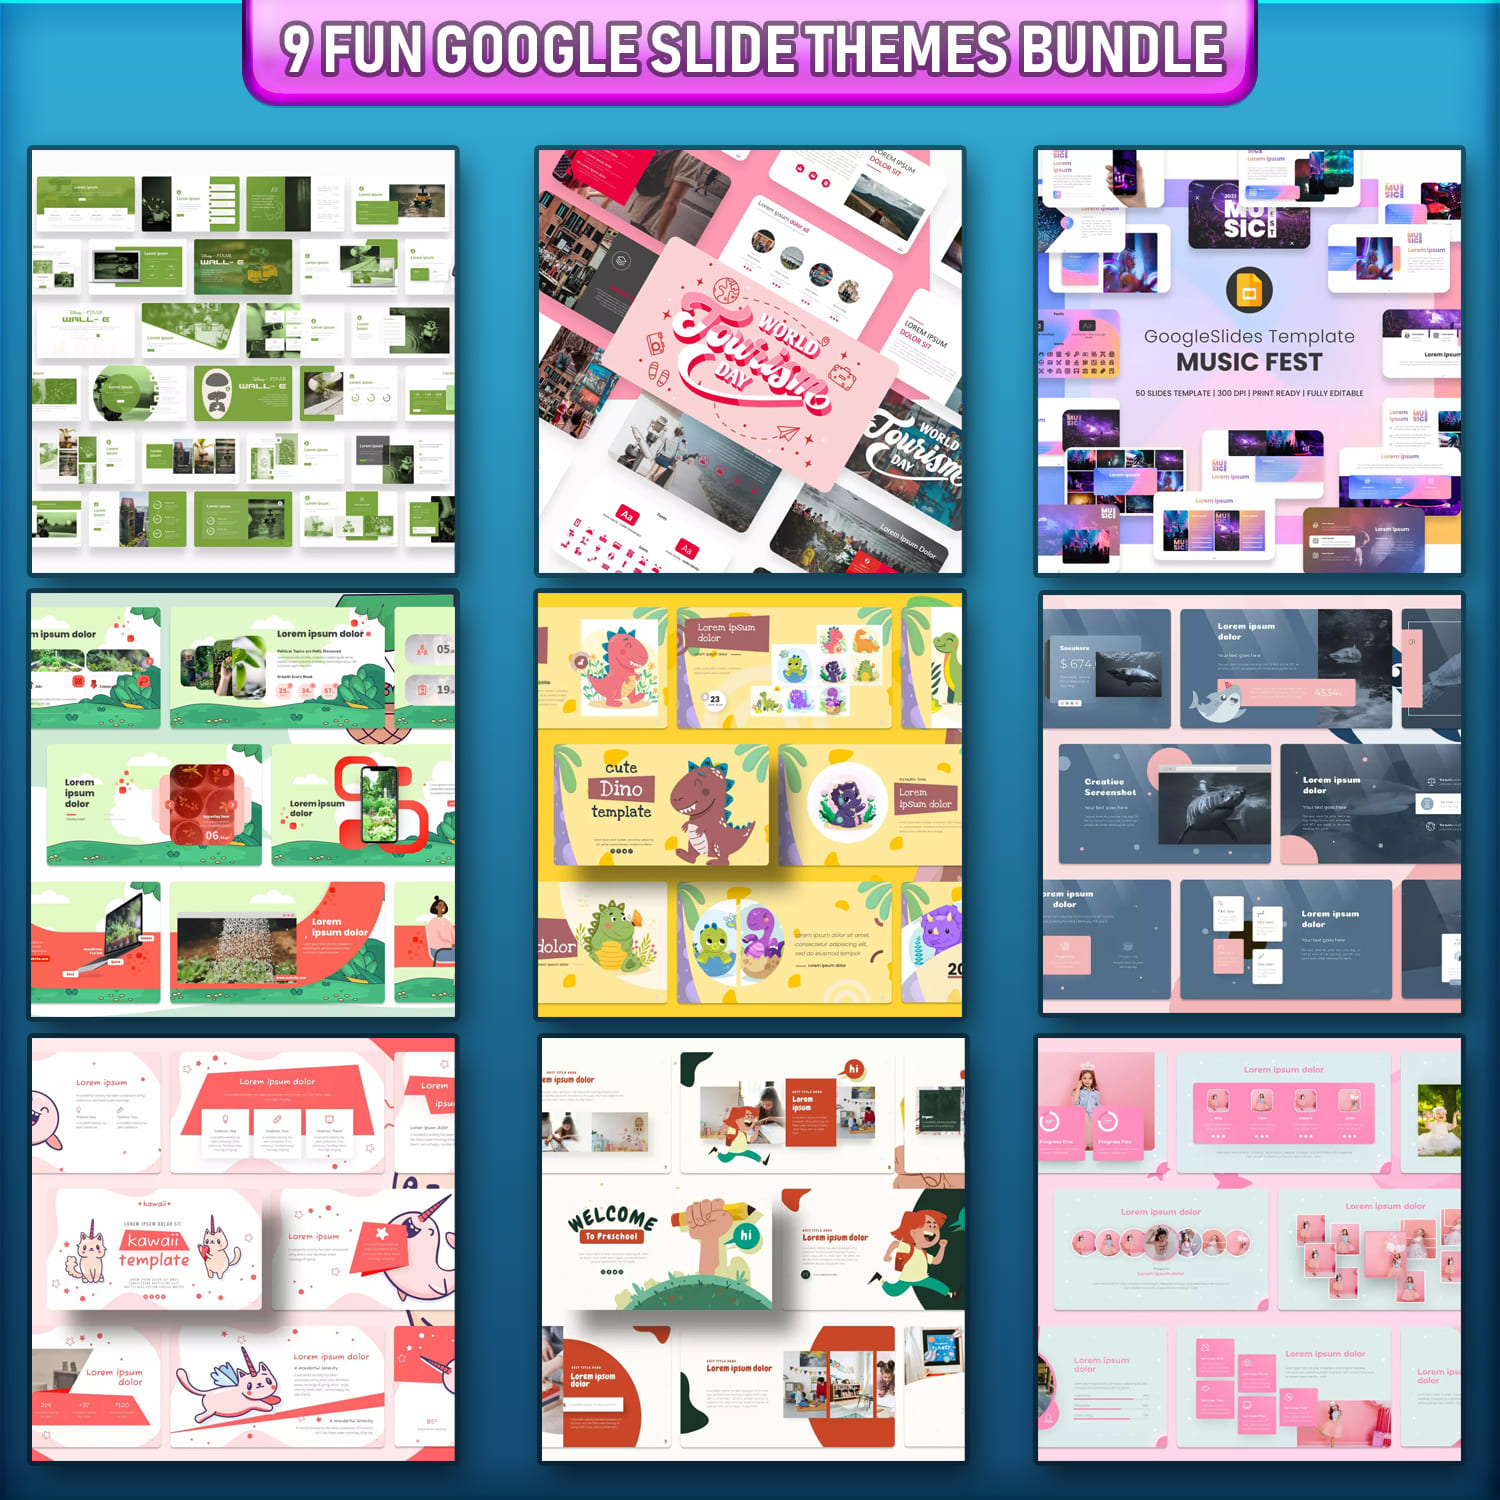 9 Fun Google Slide Themes Bundle cover image 2.